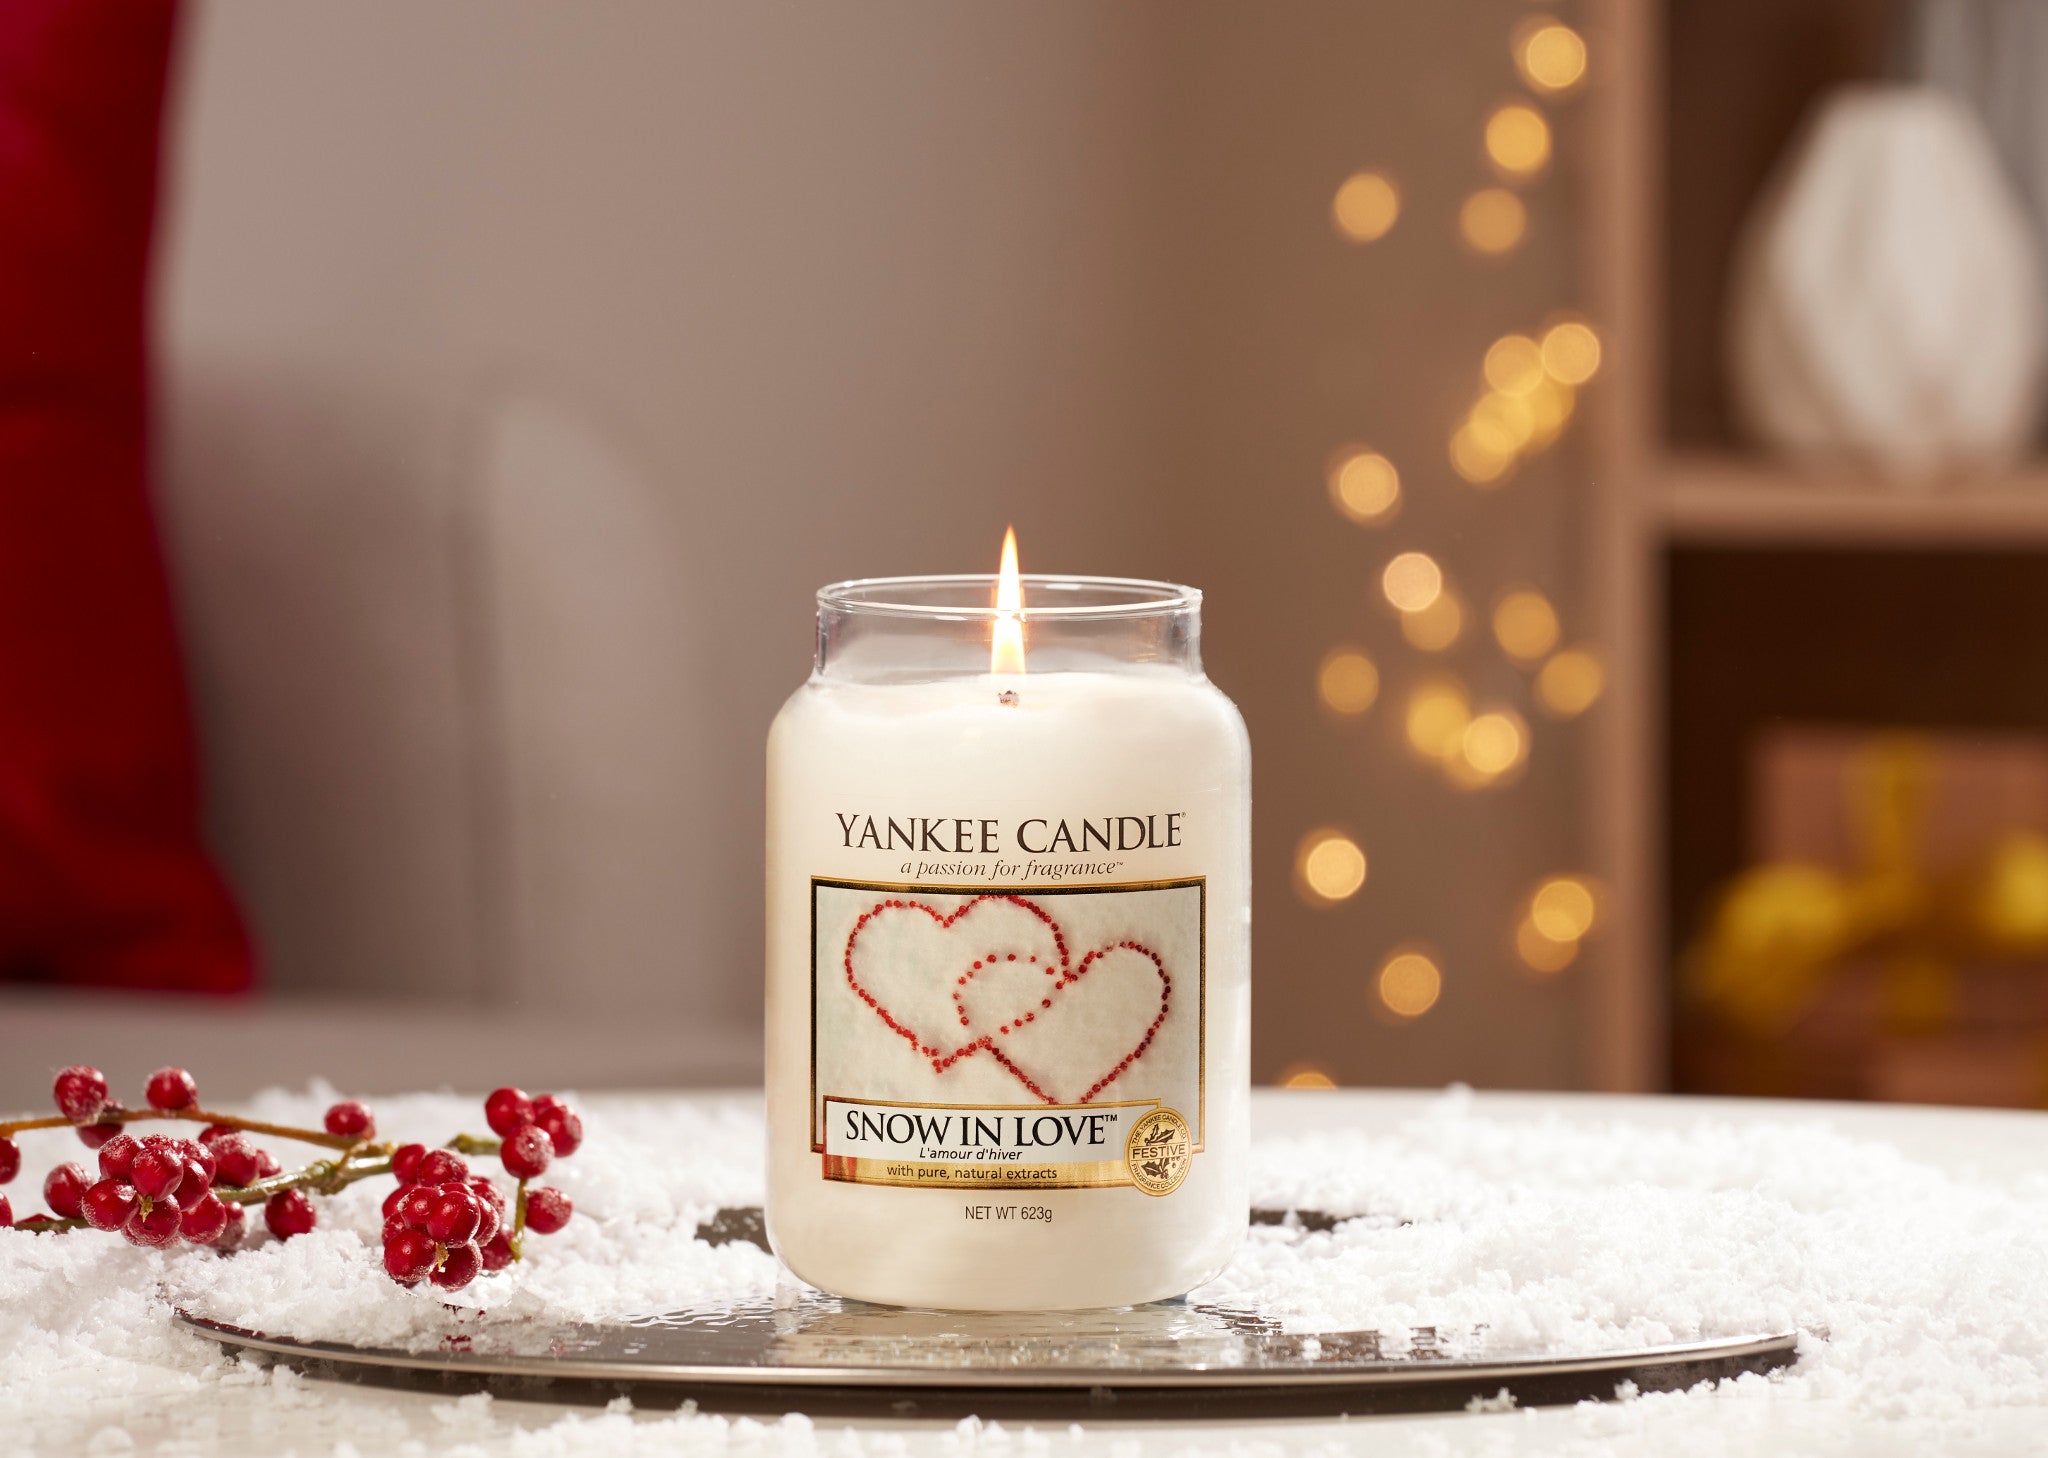 SNOW IN LOVE -Yankee Candle- Tea Light